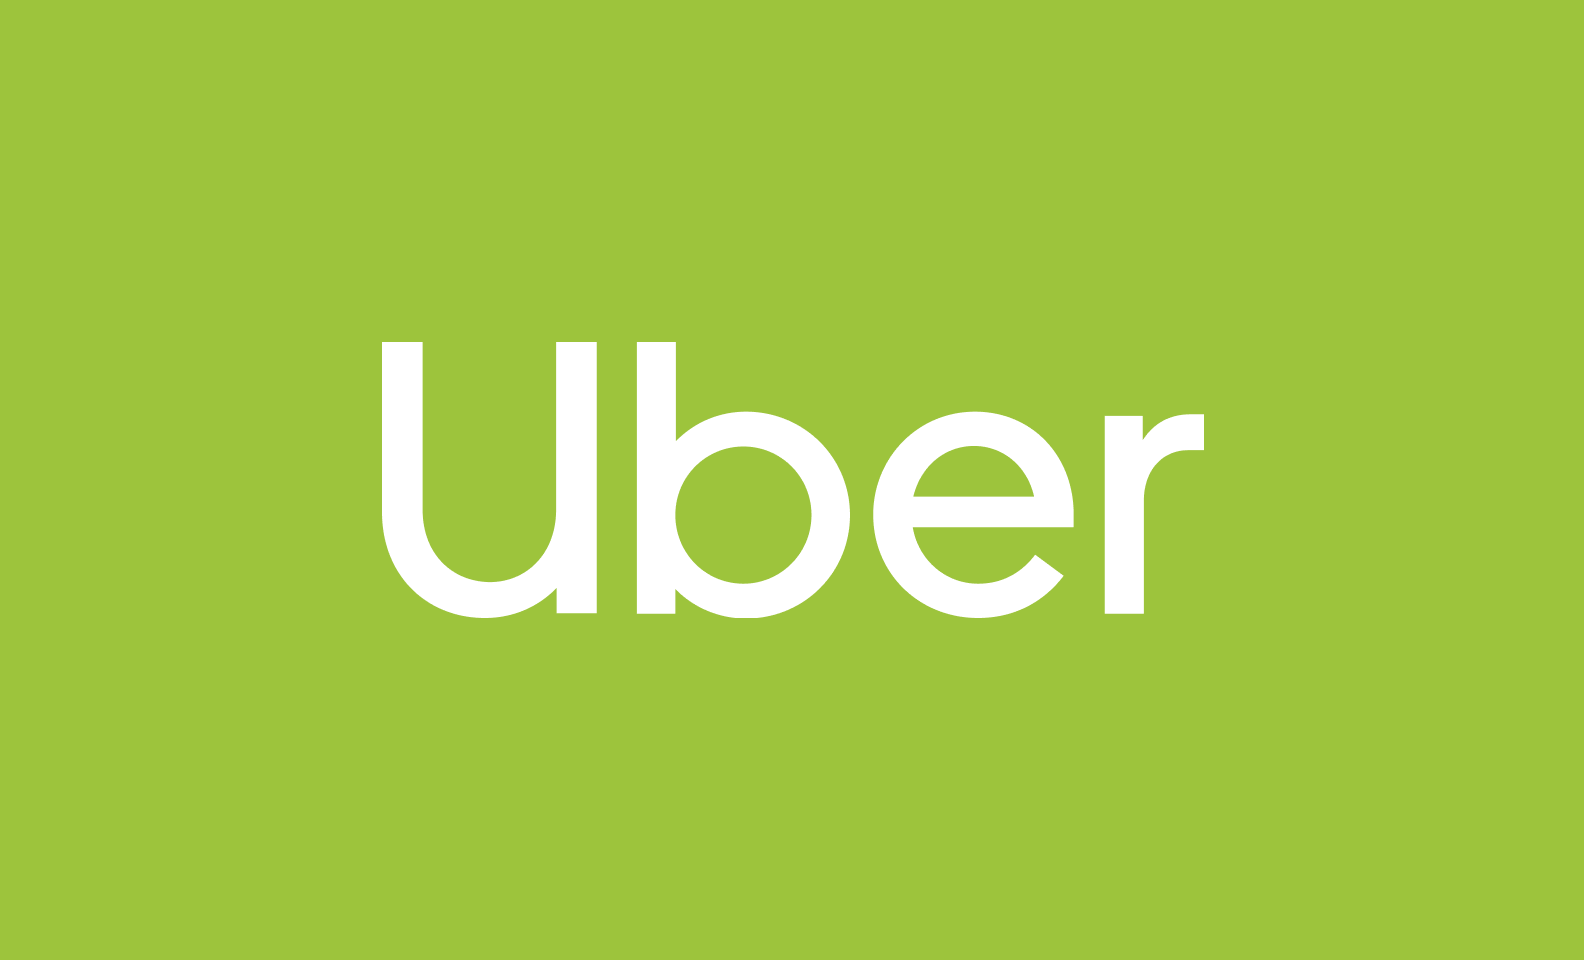 Easy to recognize Uber logo